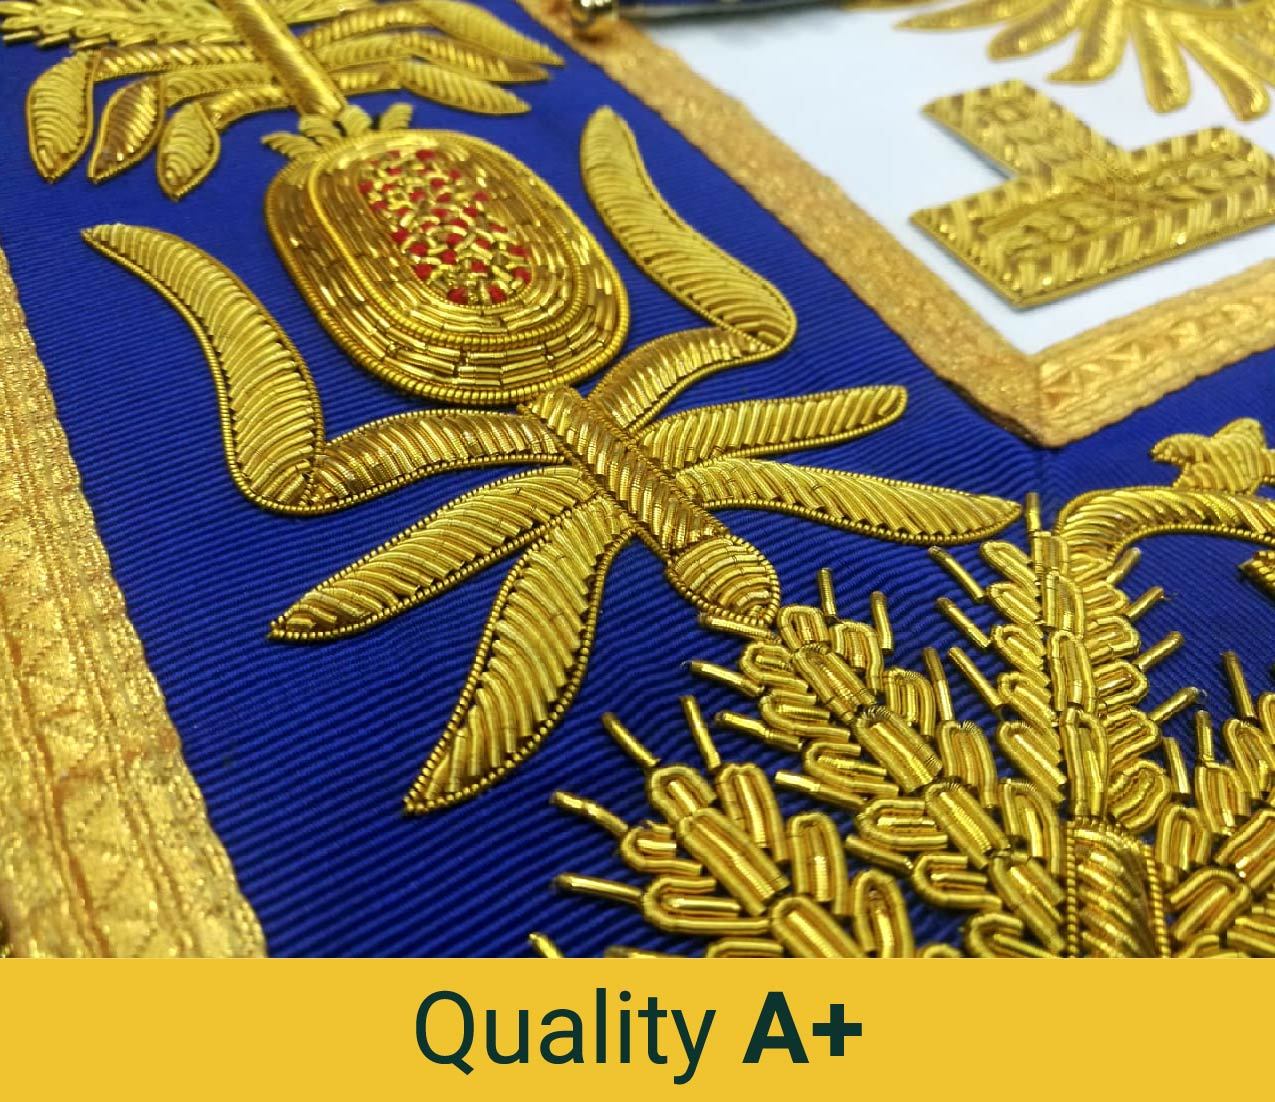 Past Grand Master Blue Lodge Apron - Blue Gold Hand Embroidery - Bricks Masons